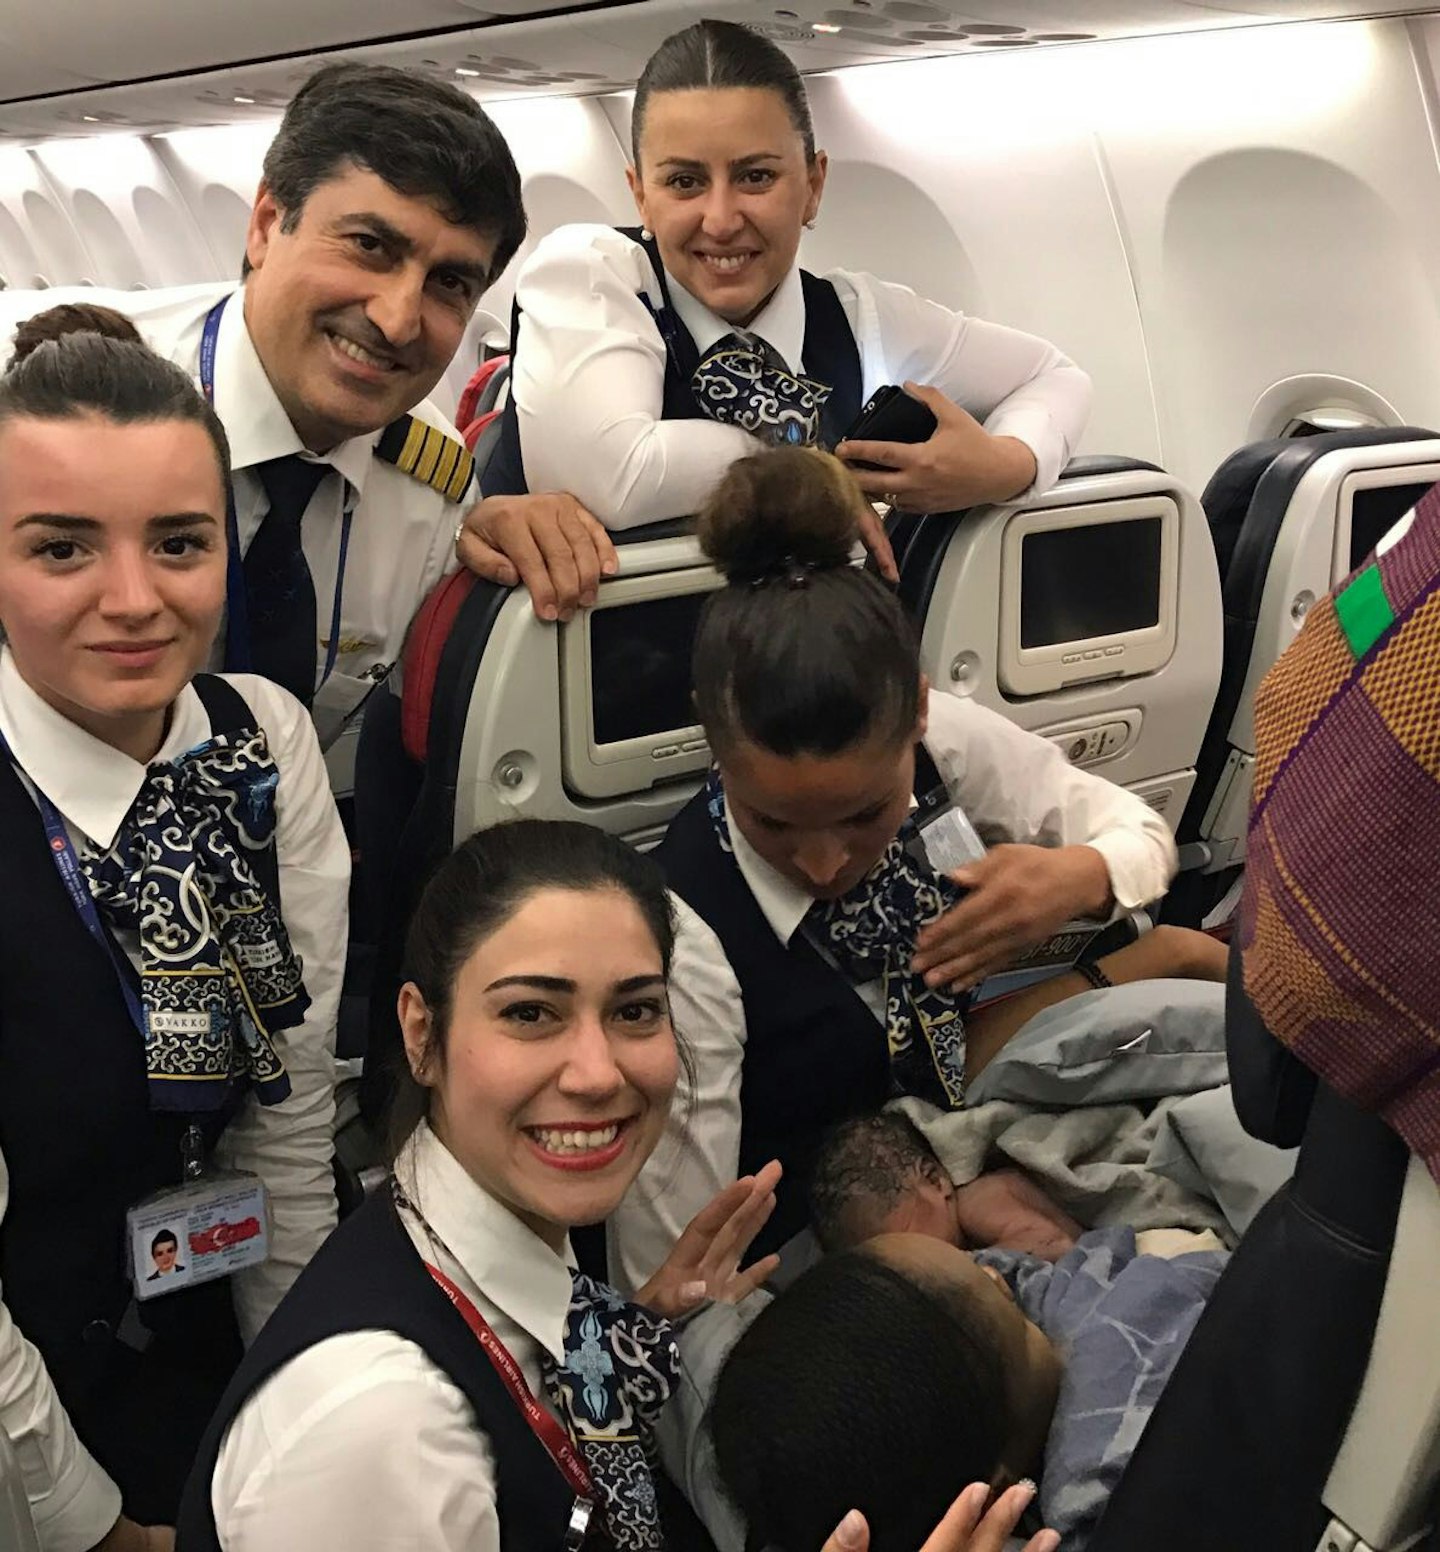 nafi-diaby-gives-birth-flight-42000ft-turkish-airlines-crew-baby-kadiju